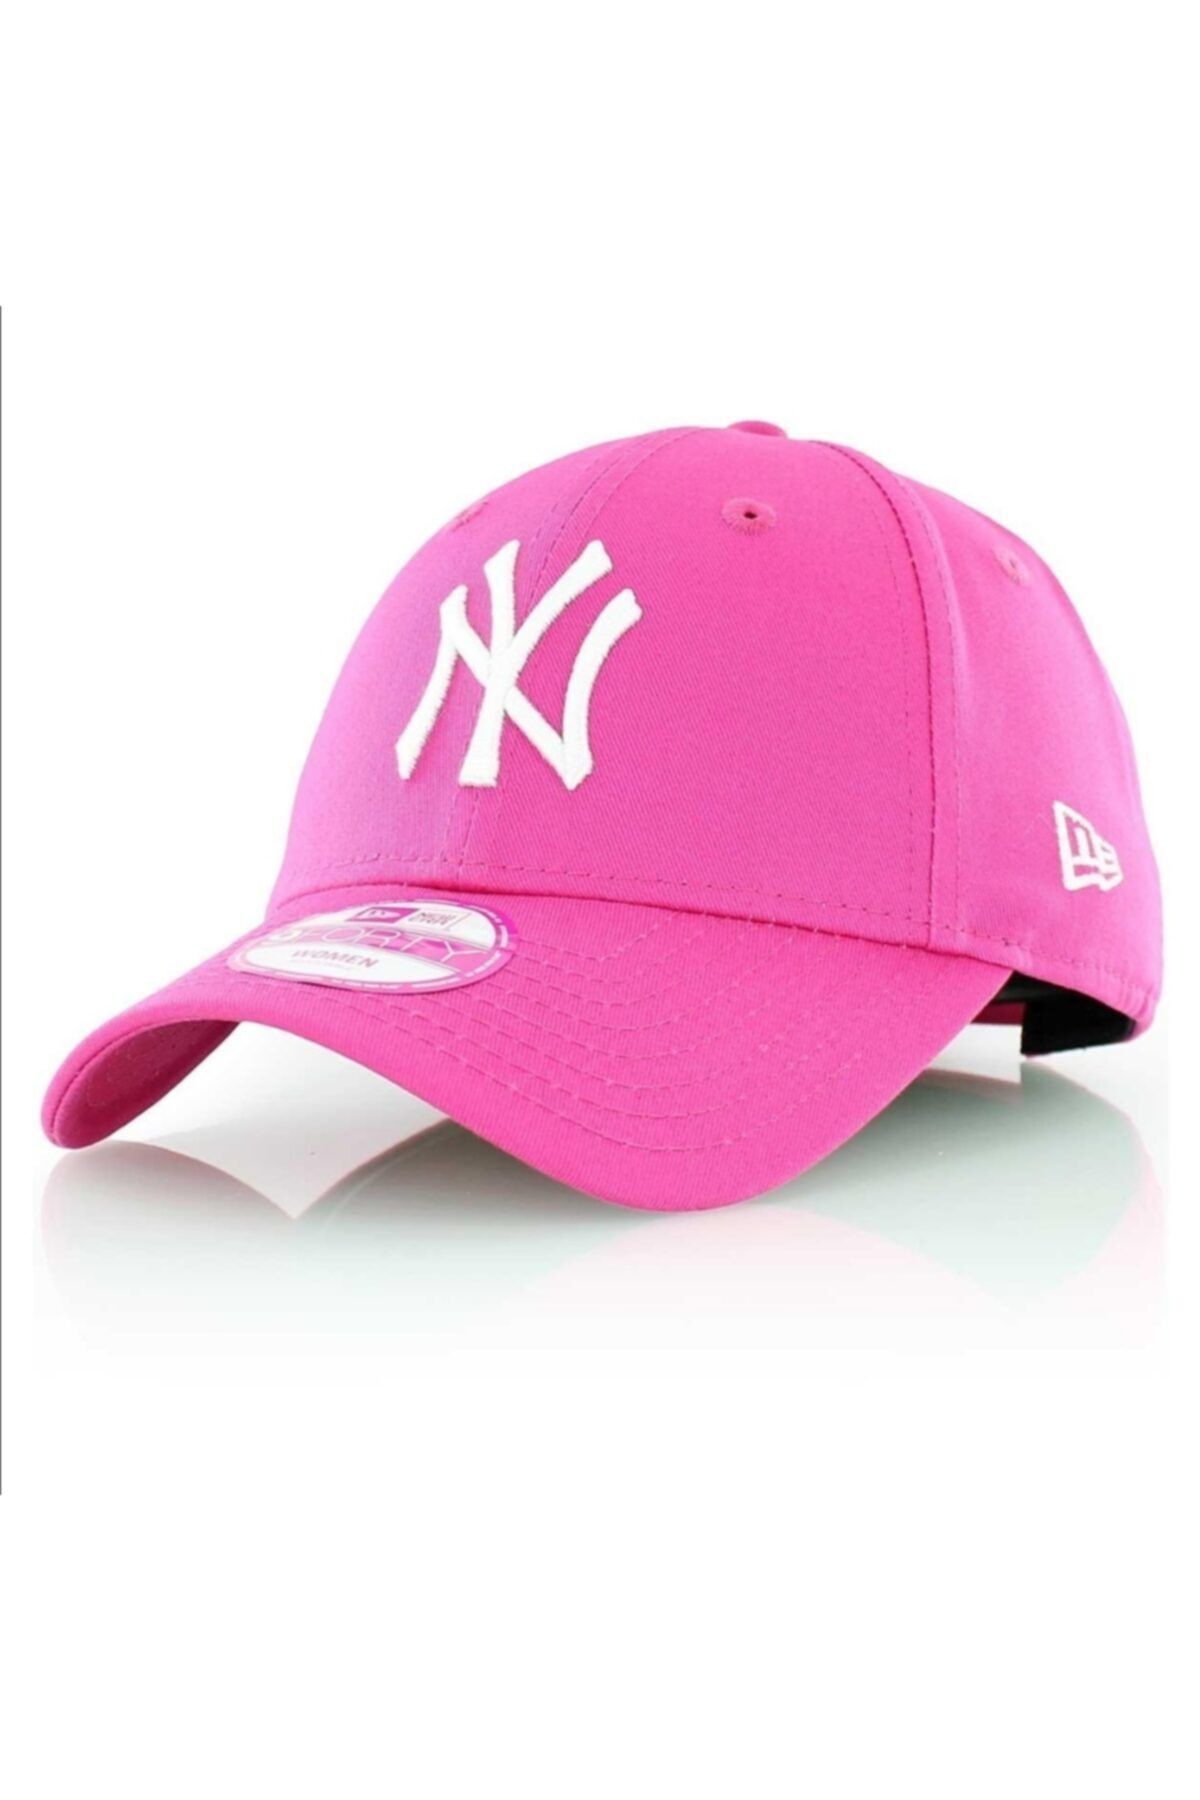 NEW ERA Kadın New York Yankees Pembe Şapka 11157578-s